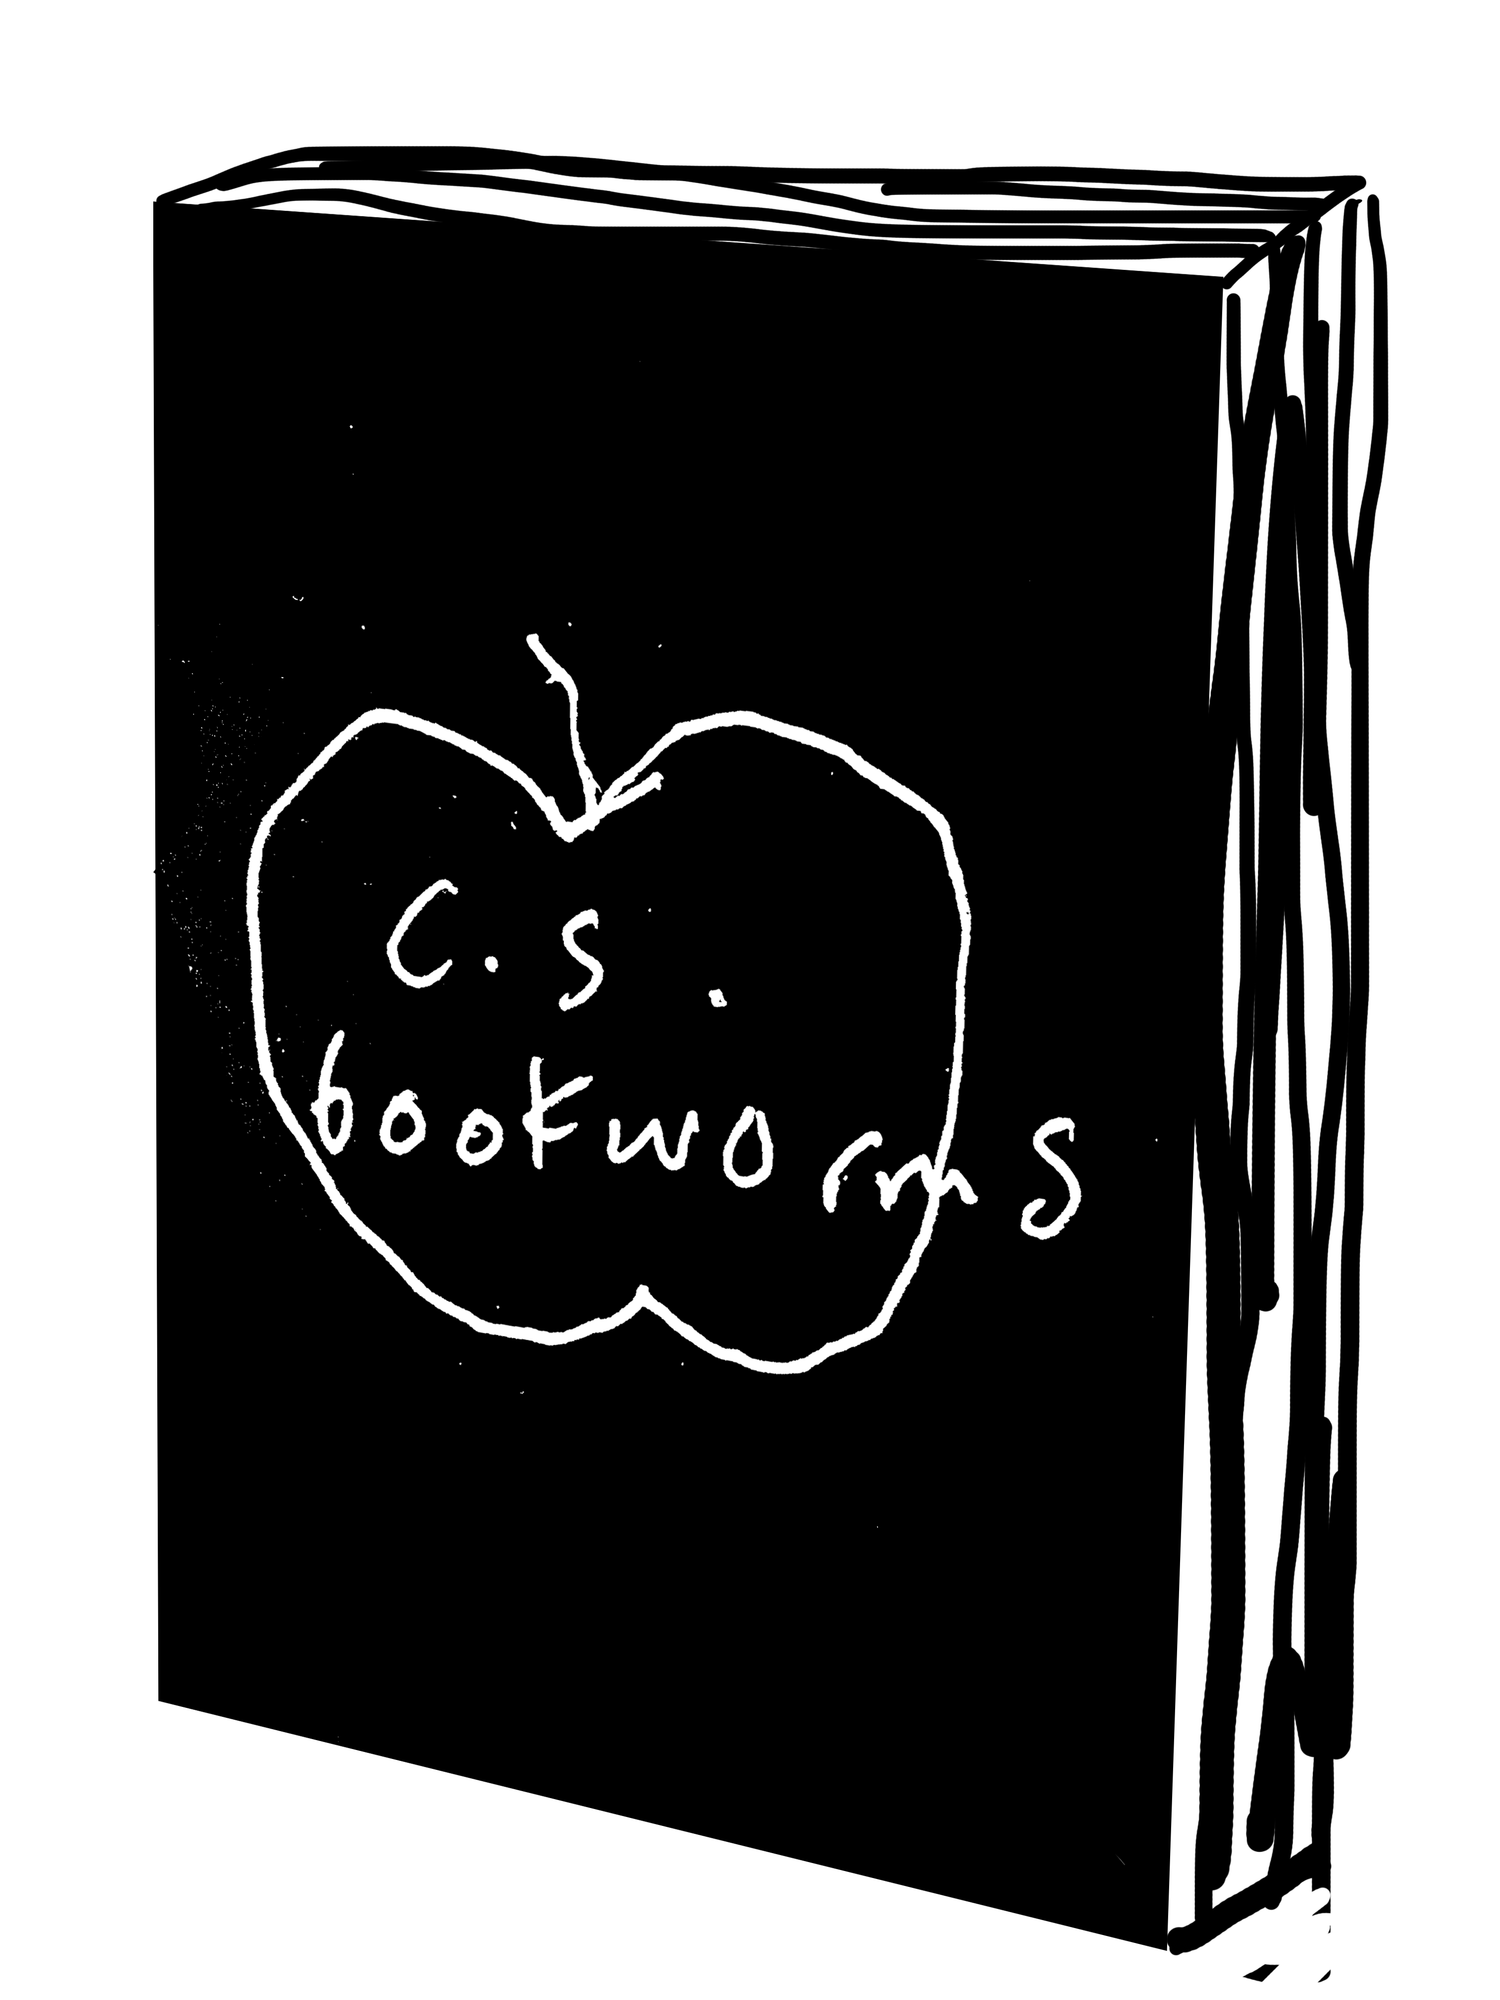 C.S. Bookworms